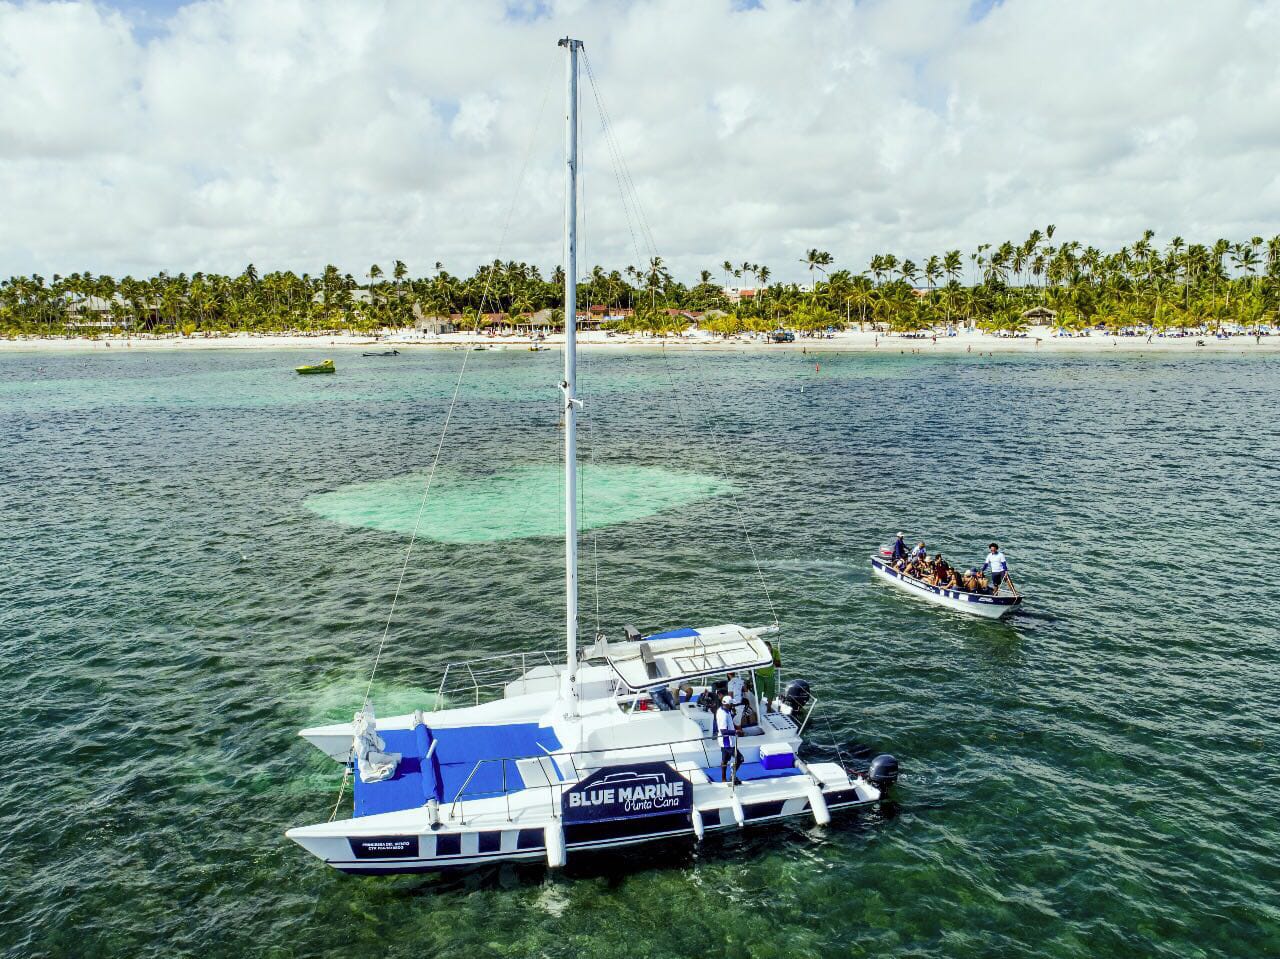 Catamaran Tour in Punta Cana